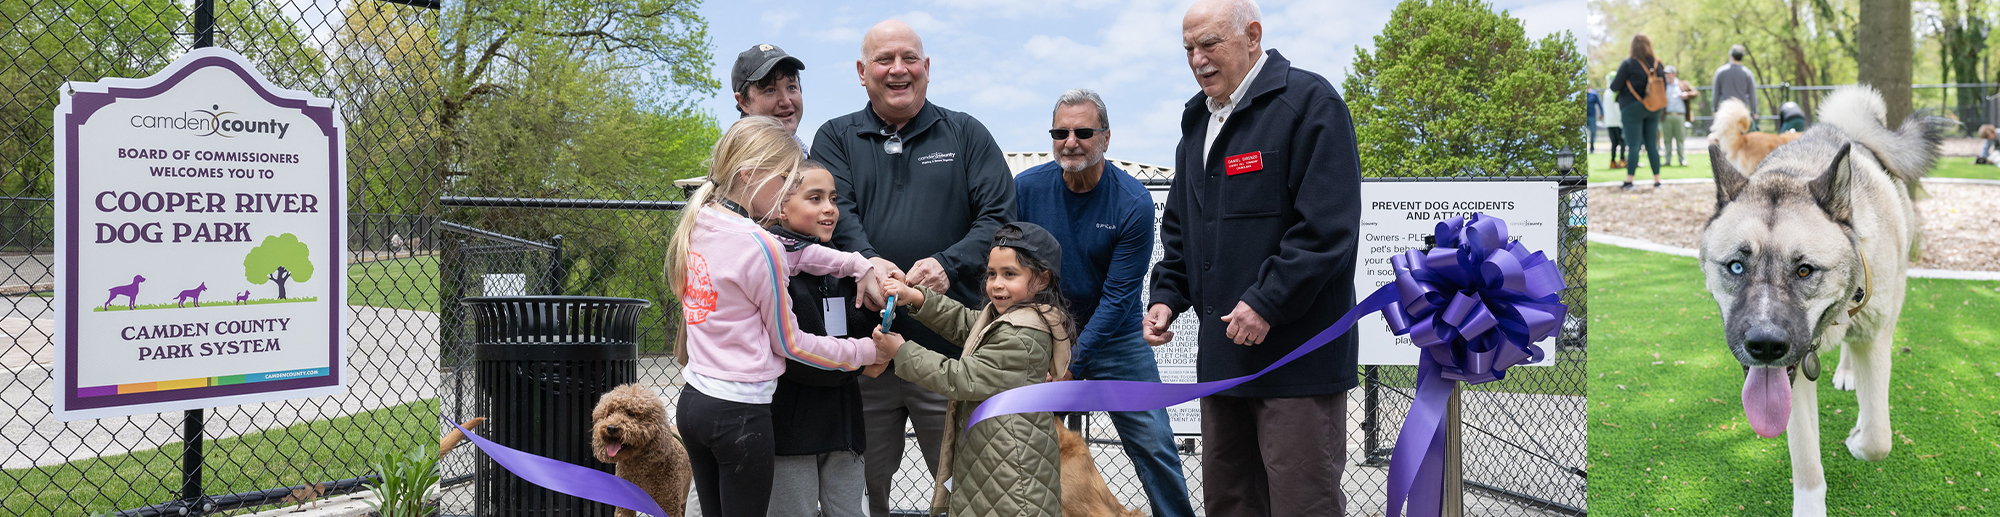 Cooper River Dog Park Grand Reopening